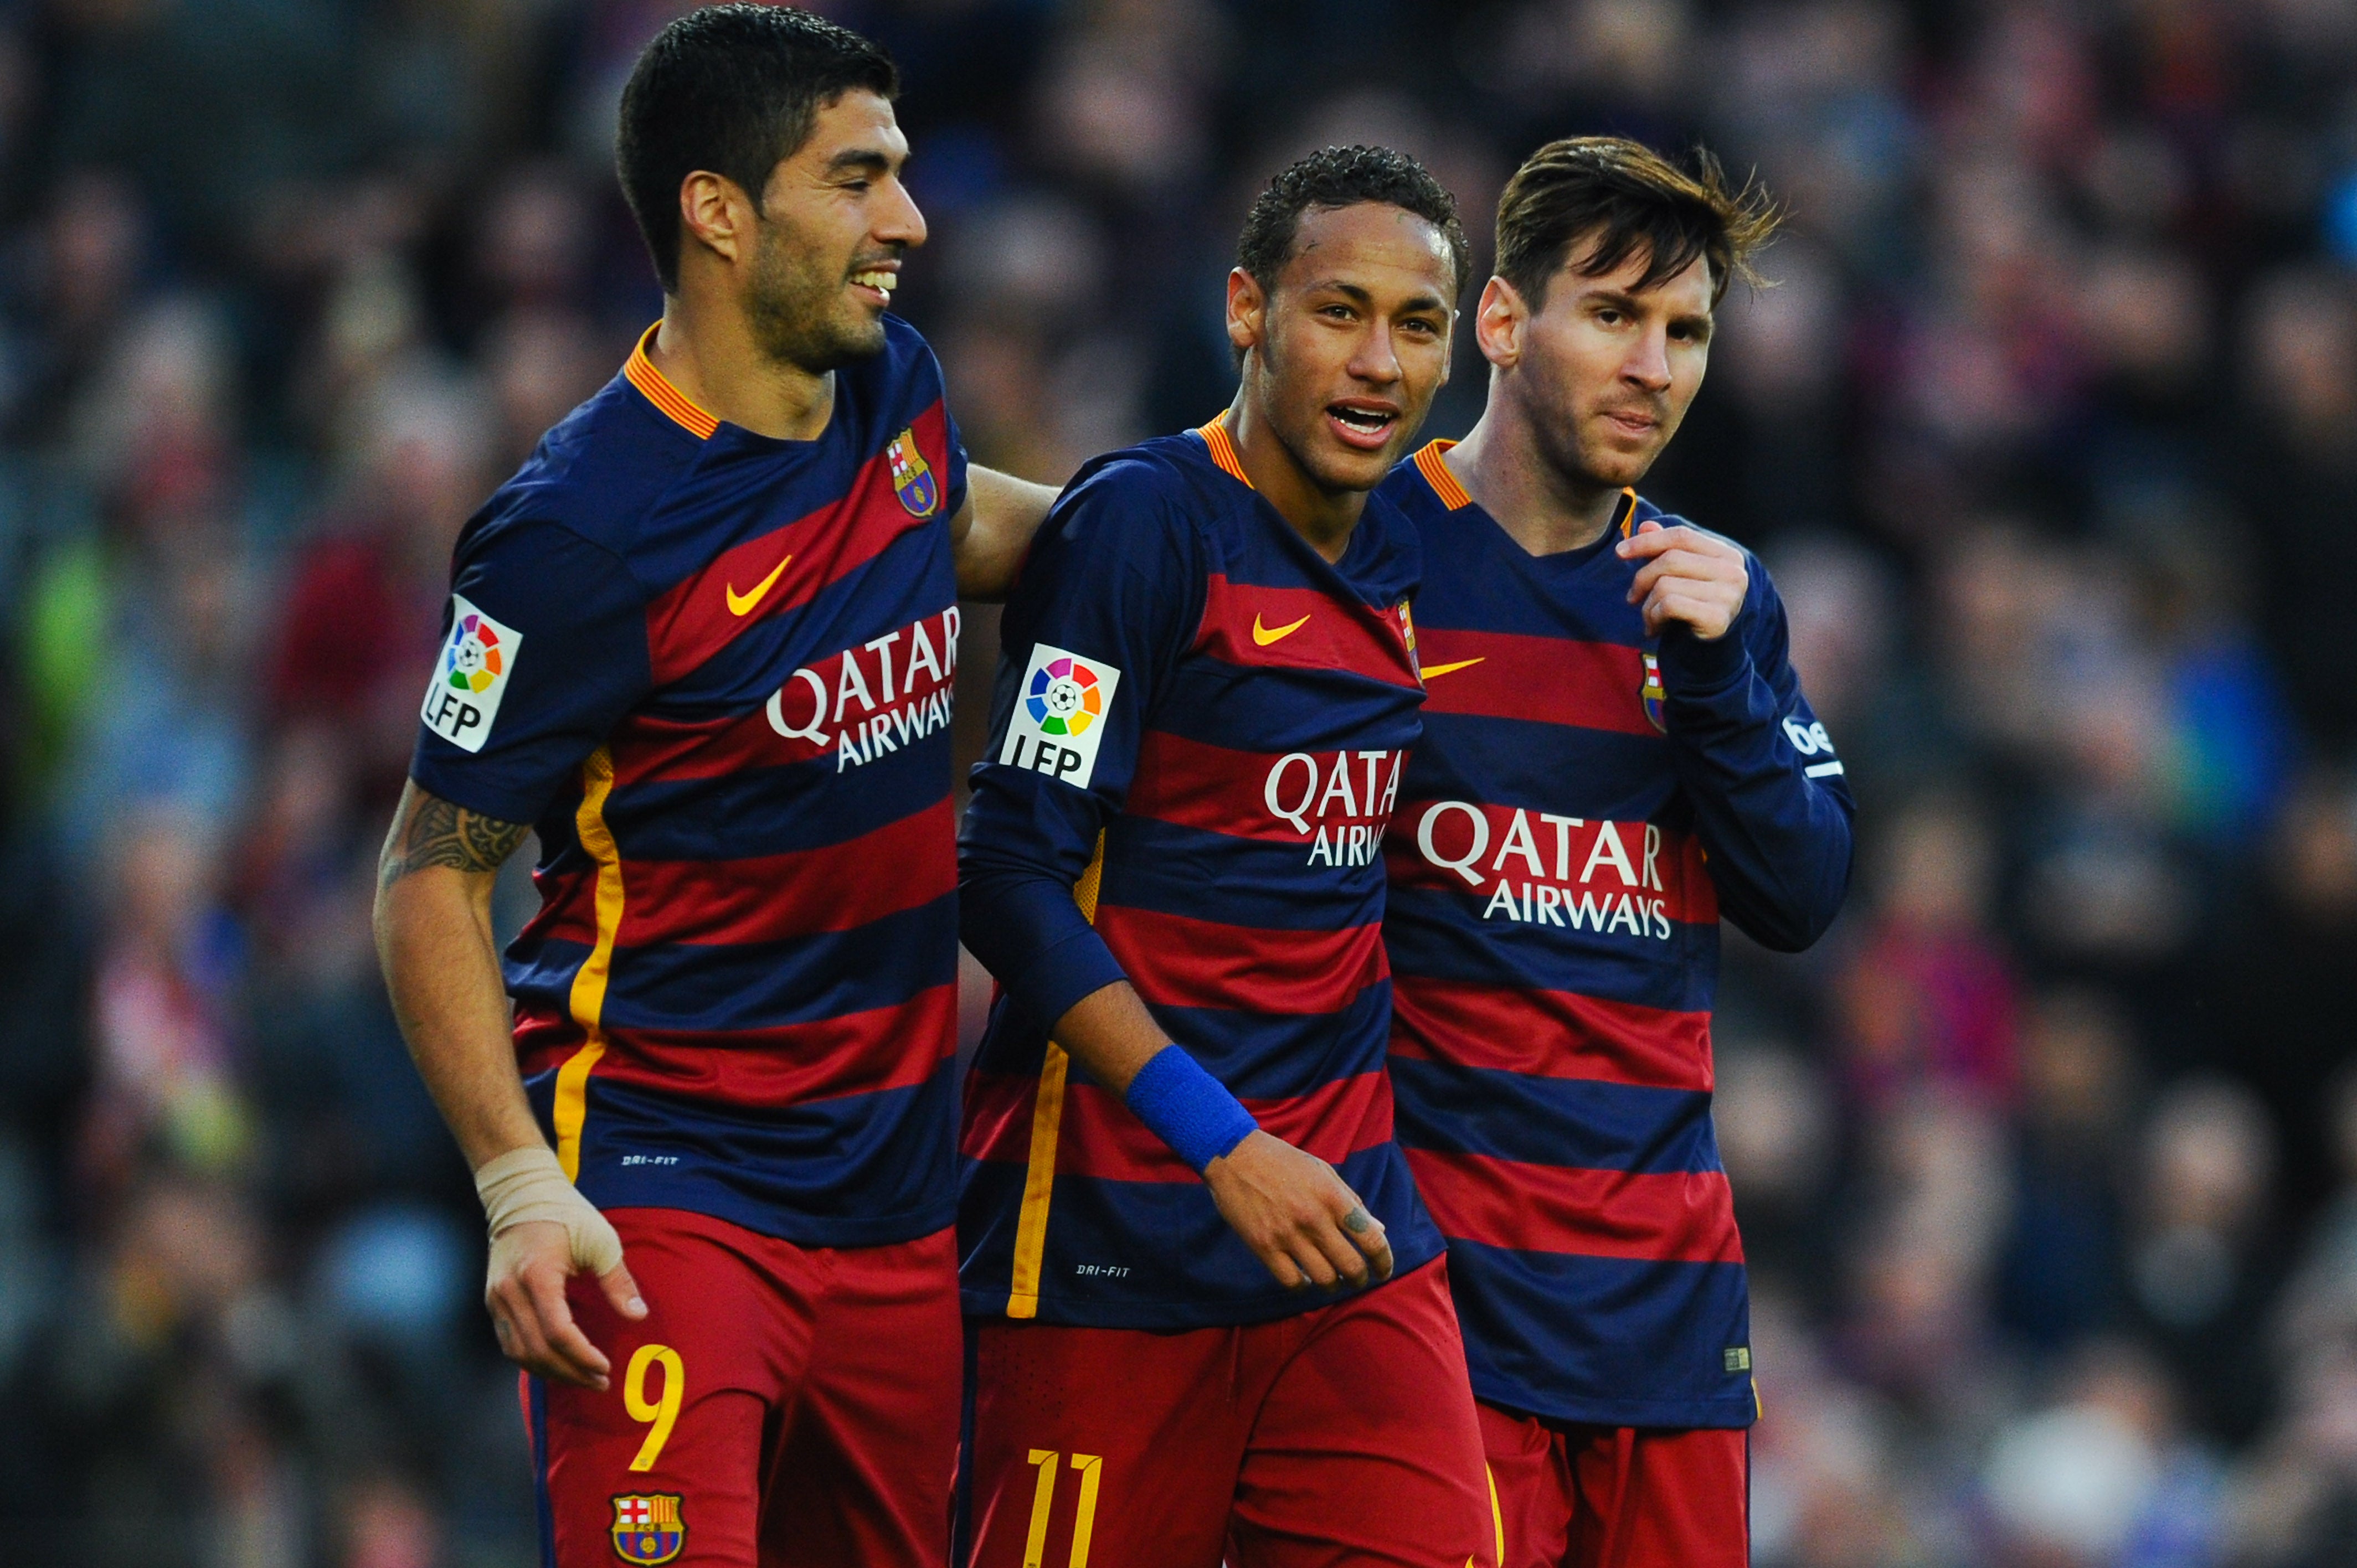 Luis Suarez, Neymar and Messi spearheaded a brilliant Barcelona team